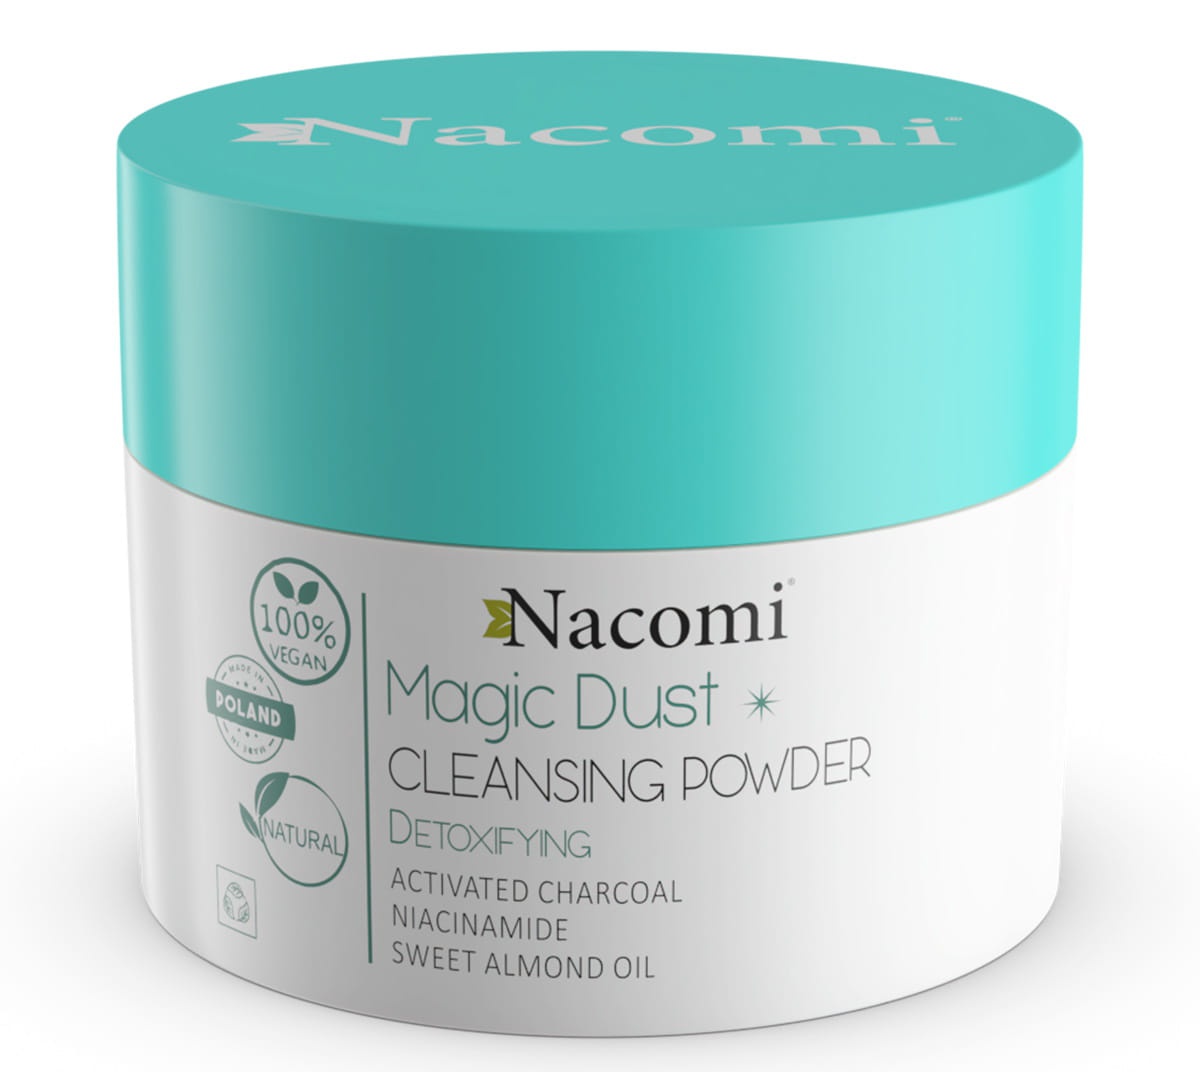 Nacomi Magic Dust Detoxifying Cleansing Powder